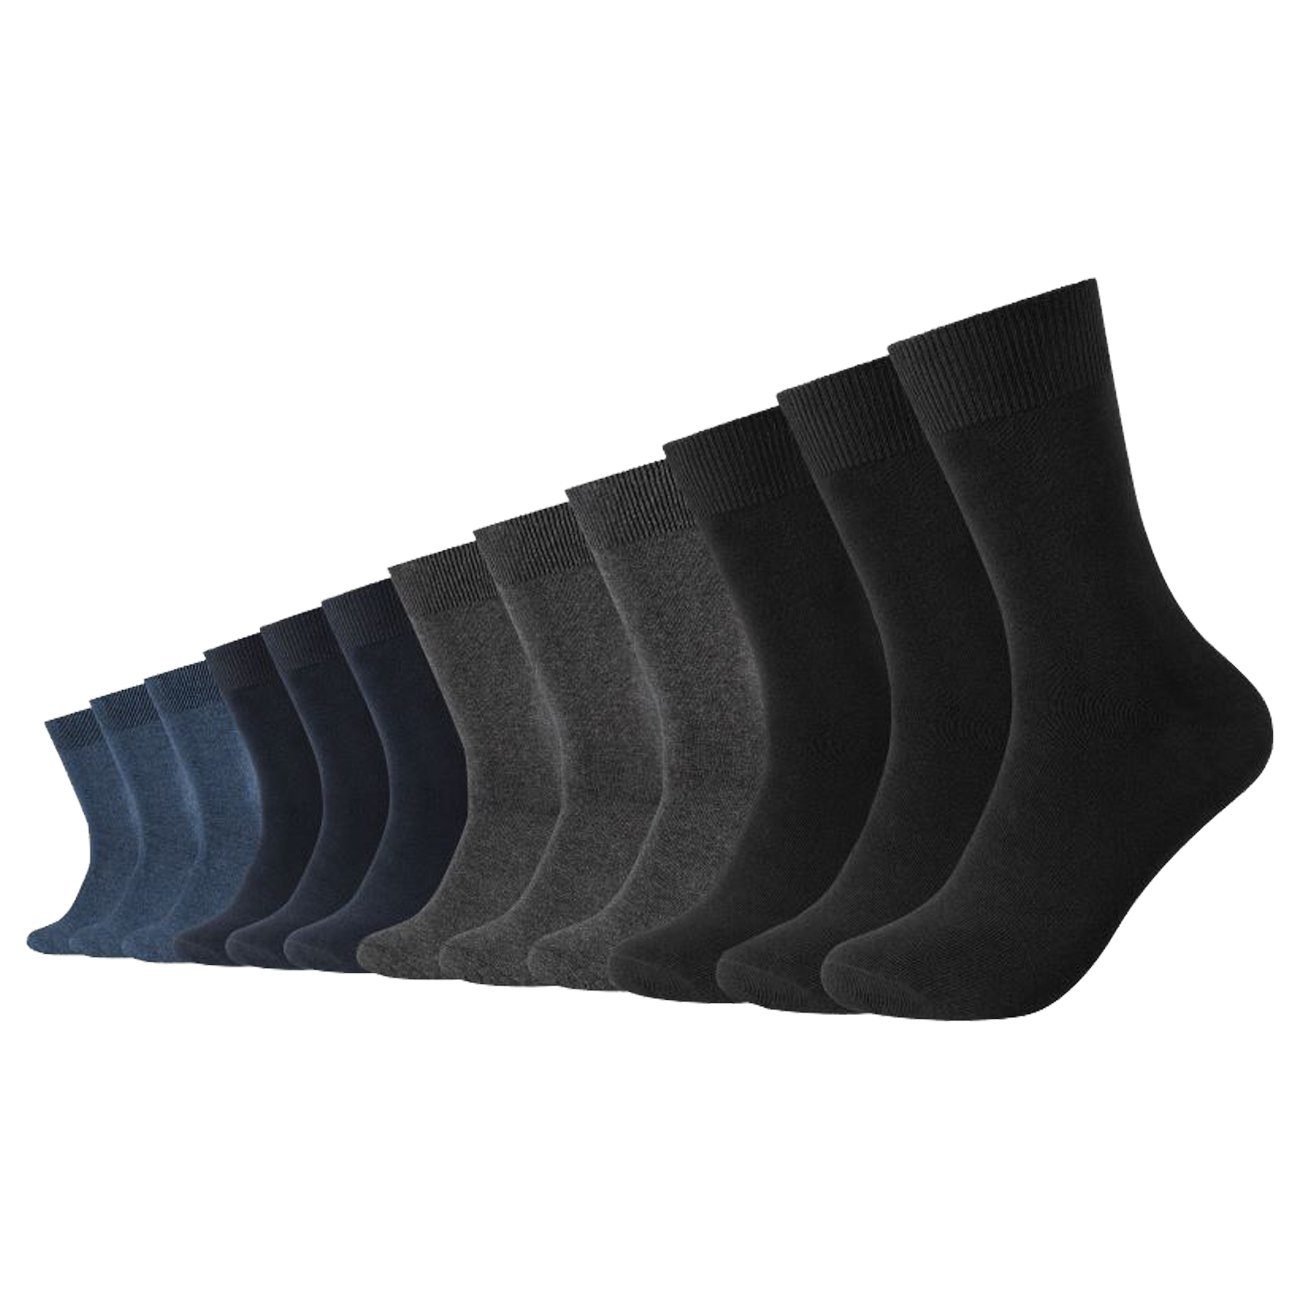 Camano Langsocken Unisex Socken Comfort Cotton Crew (12-Paar) Regularsocken aus pflegeleichter Baumwollmischung Anthracite Mix (9803)